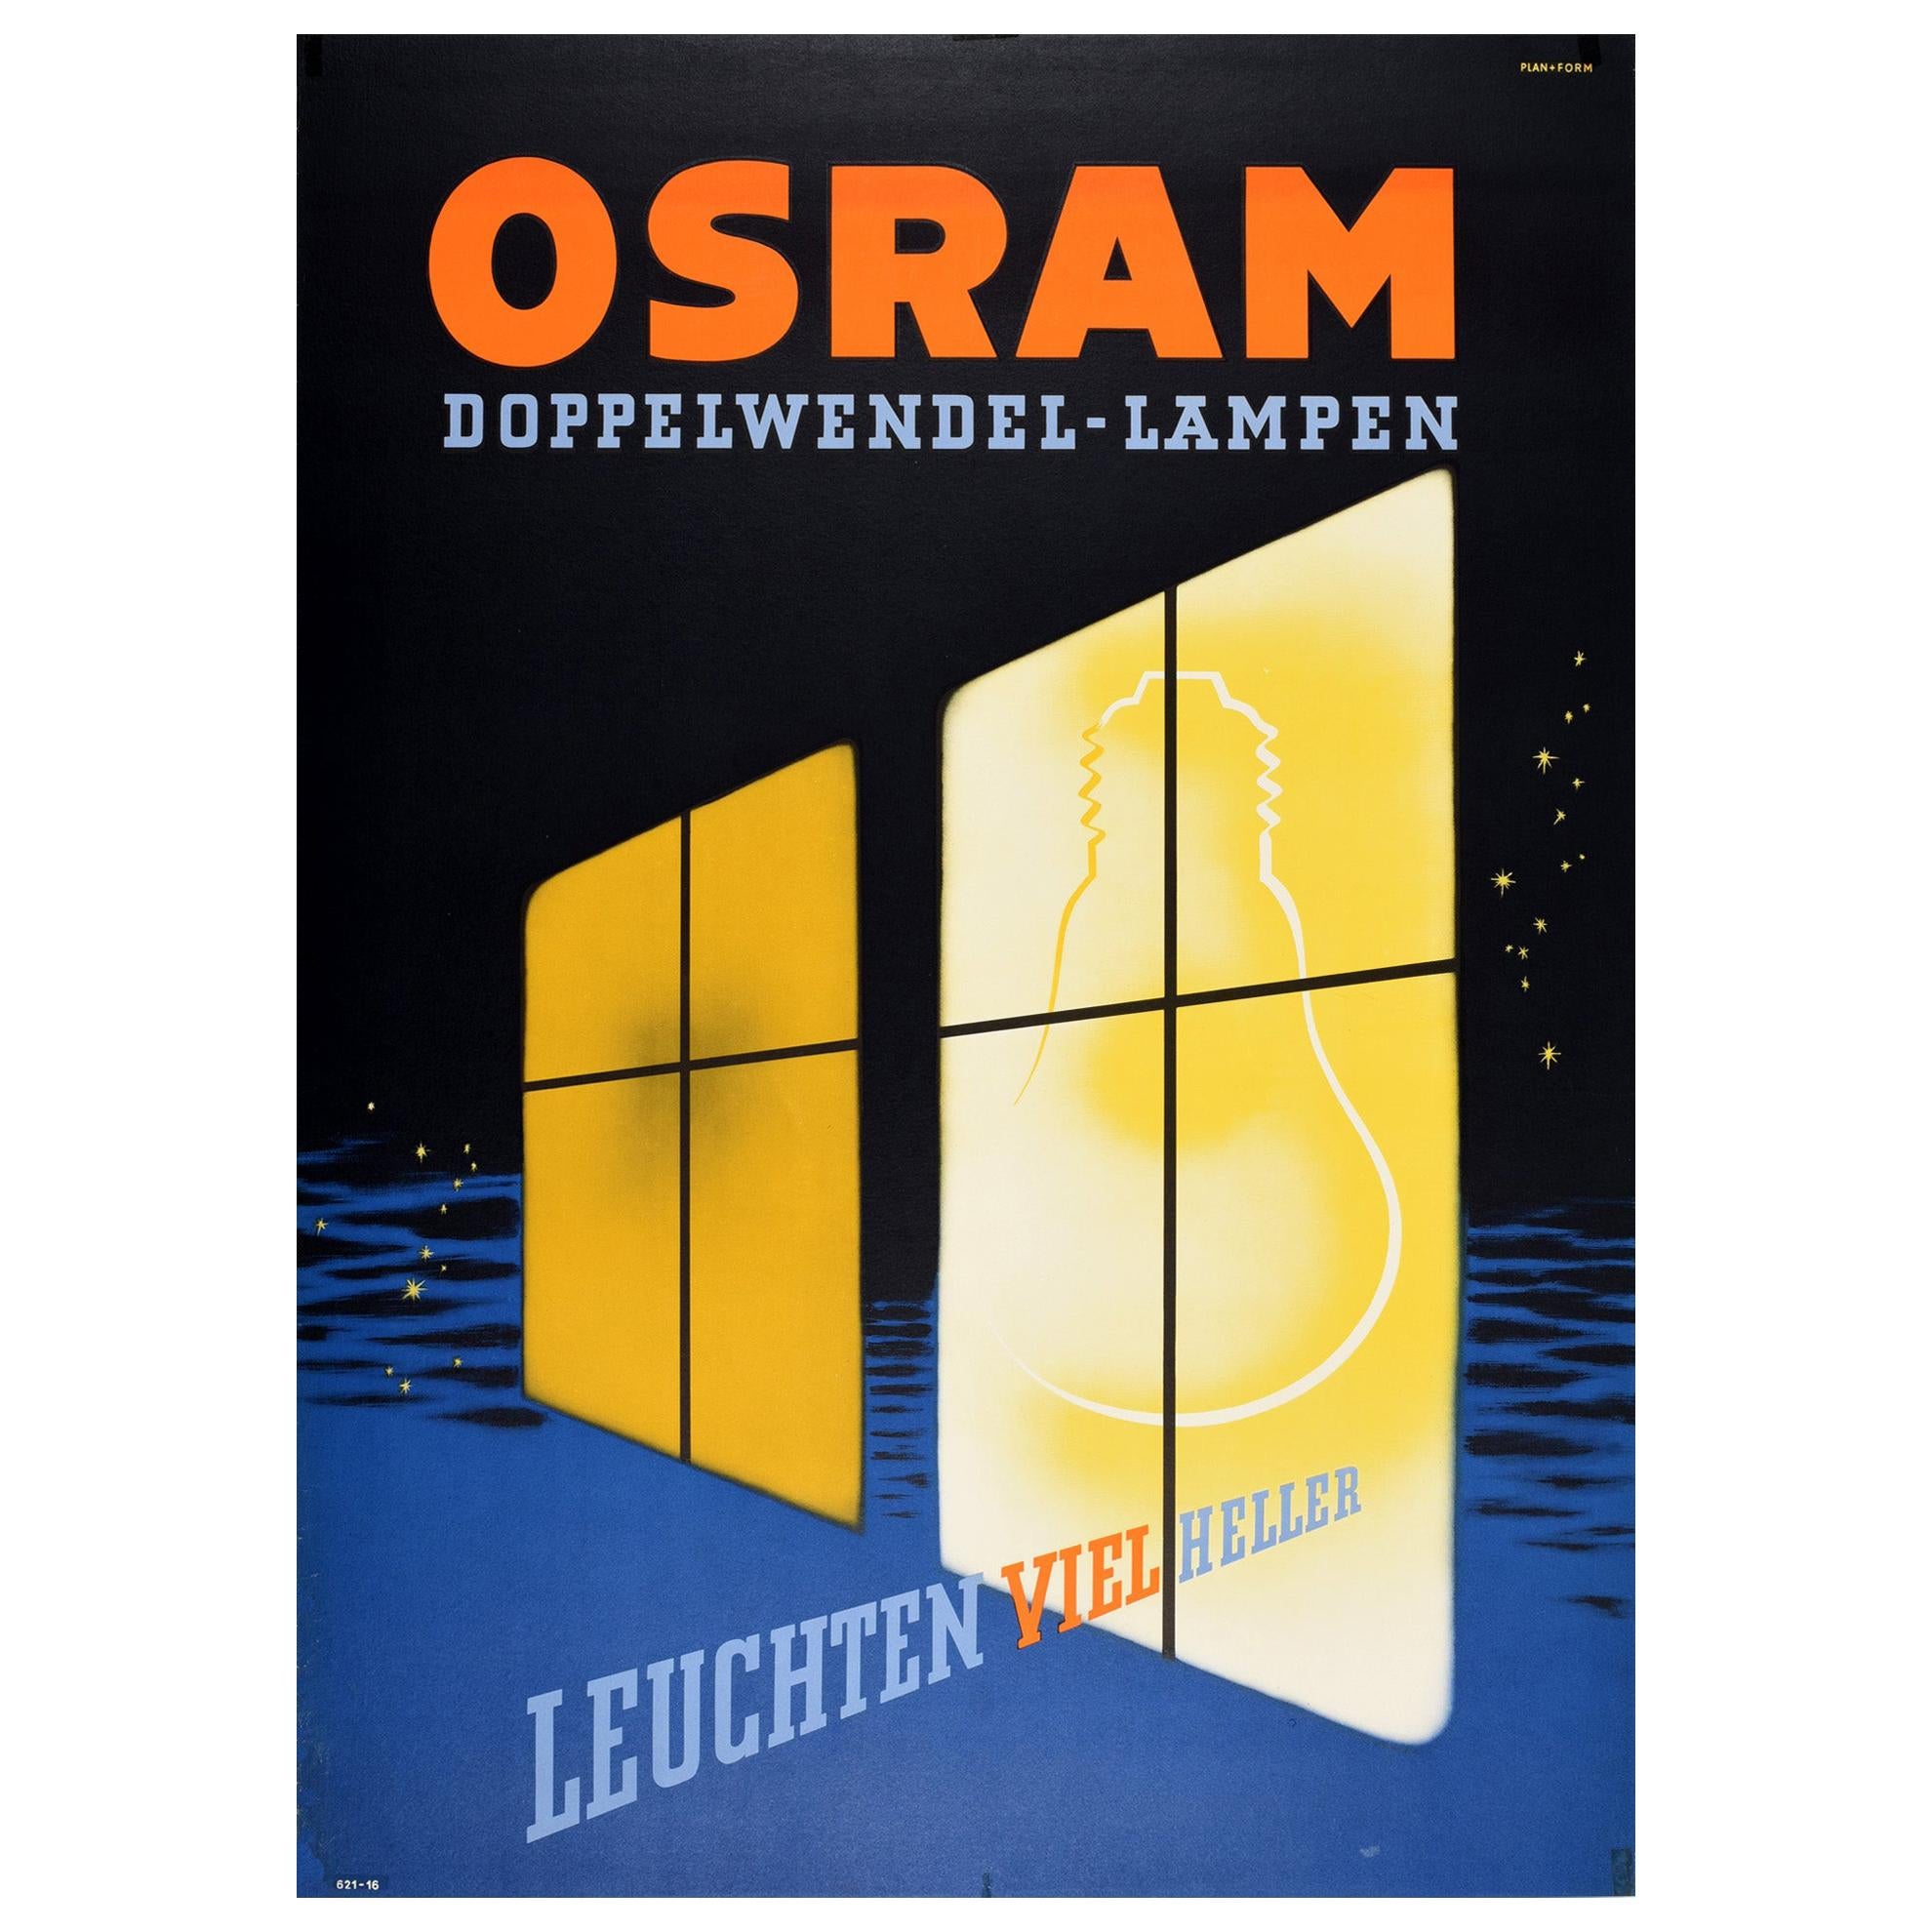 Original Antique Poster Osram Doppelwendel Lampen Light Bulbs Art Deco Design